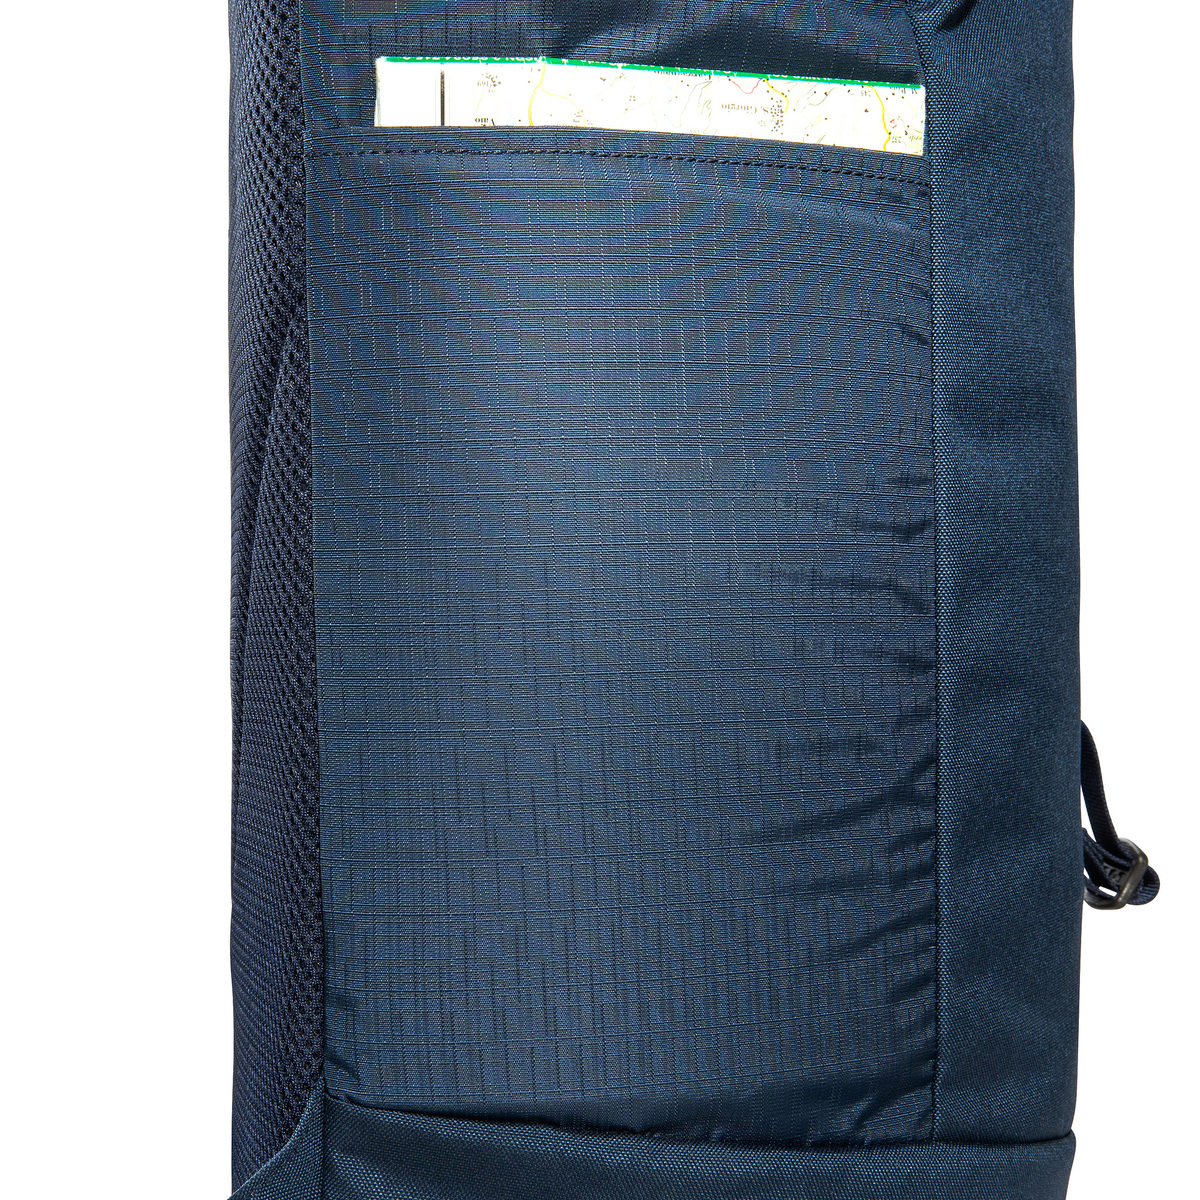 Daypacks - Grip Rolltop Pack - Tatonka | Backpacks, Tents, Outdoor ...